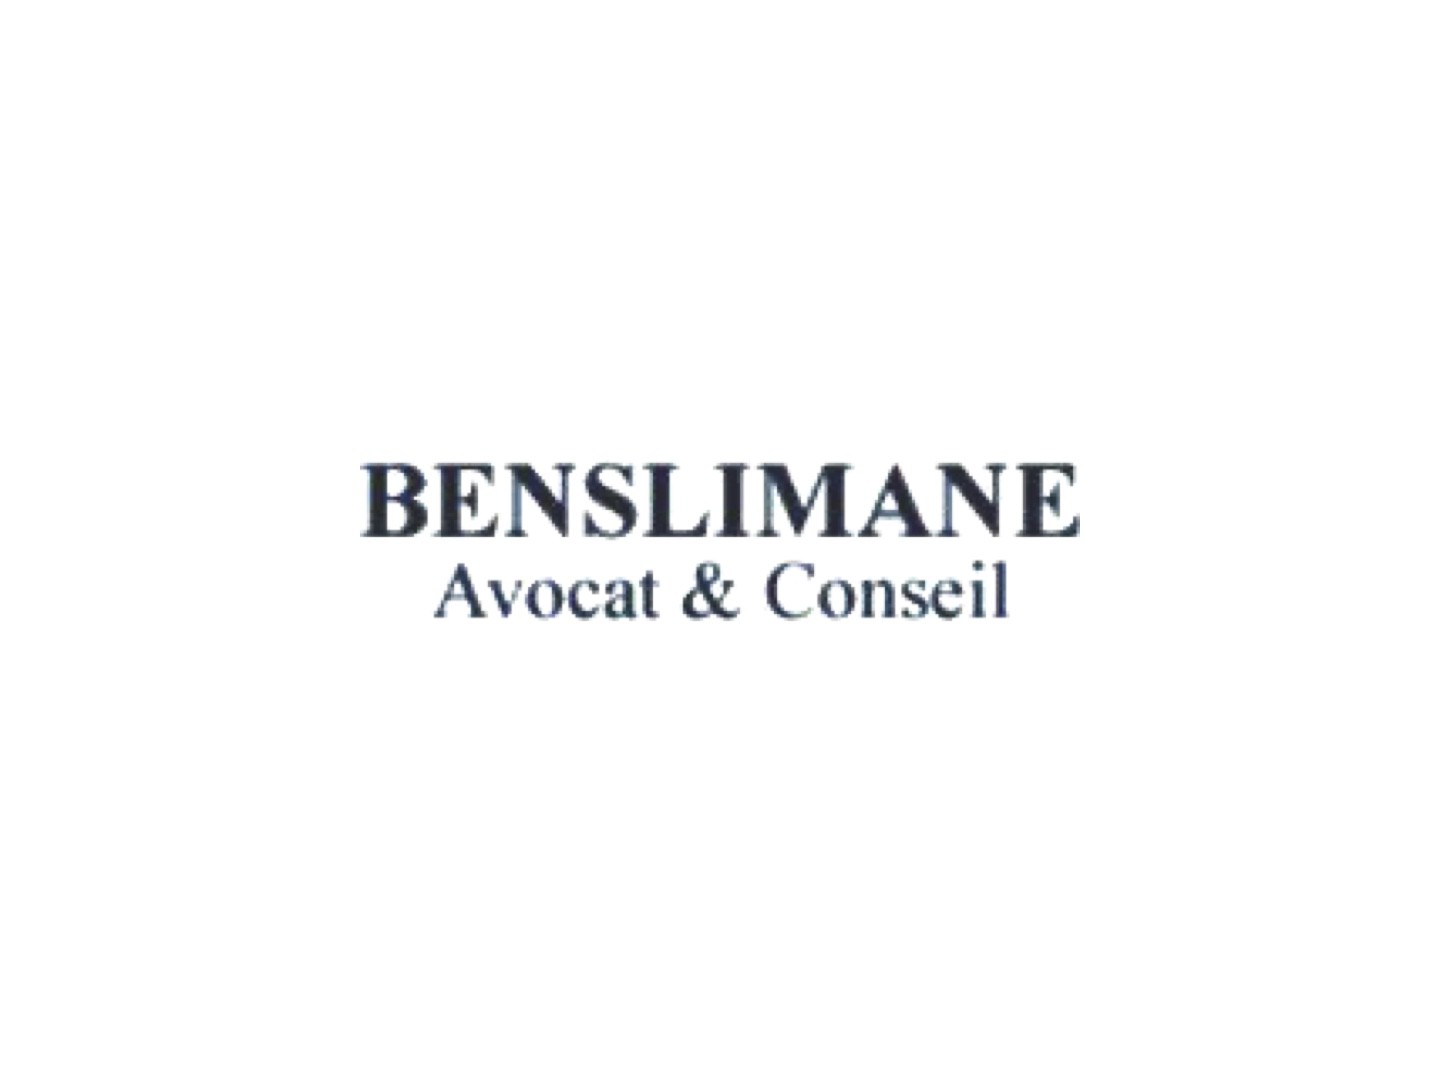 Benslimane A&C logo